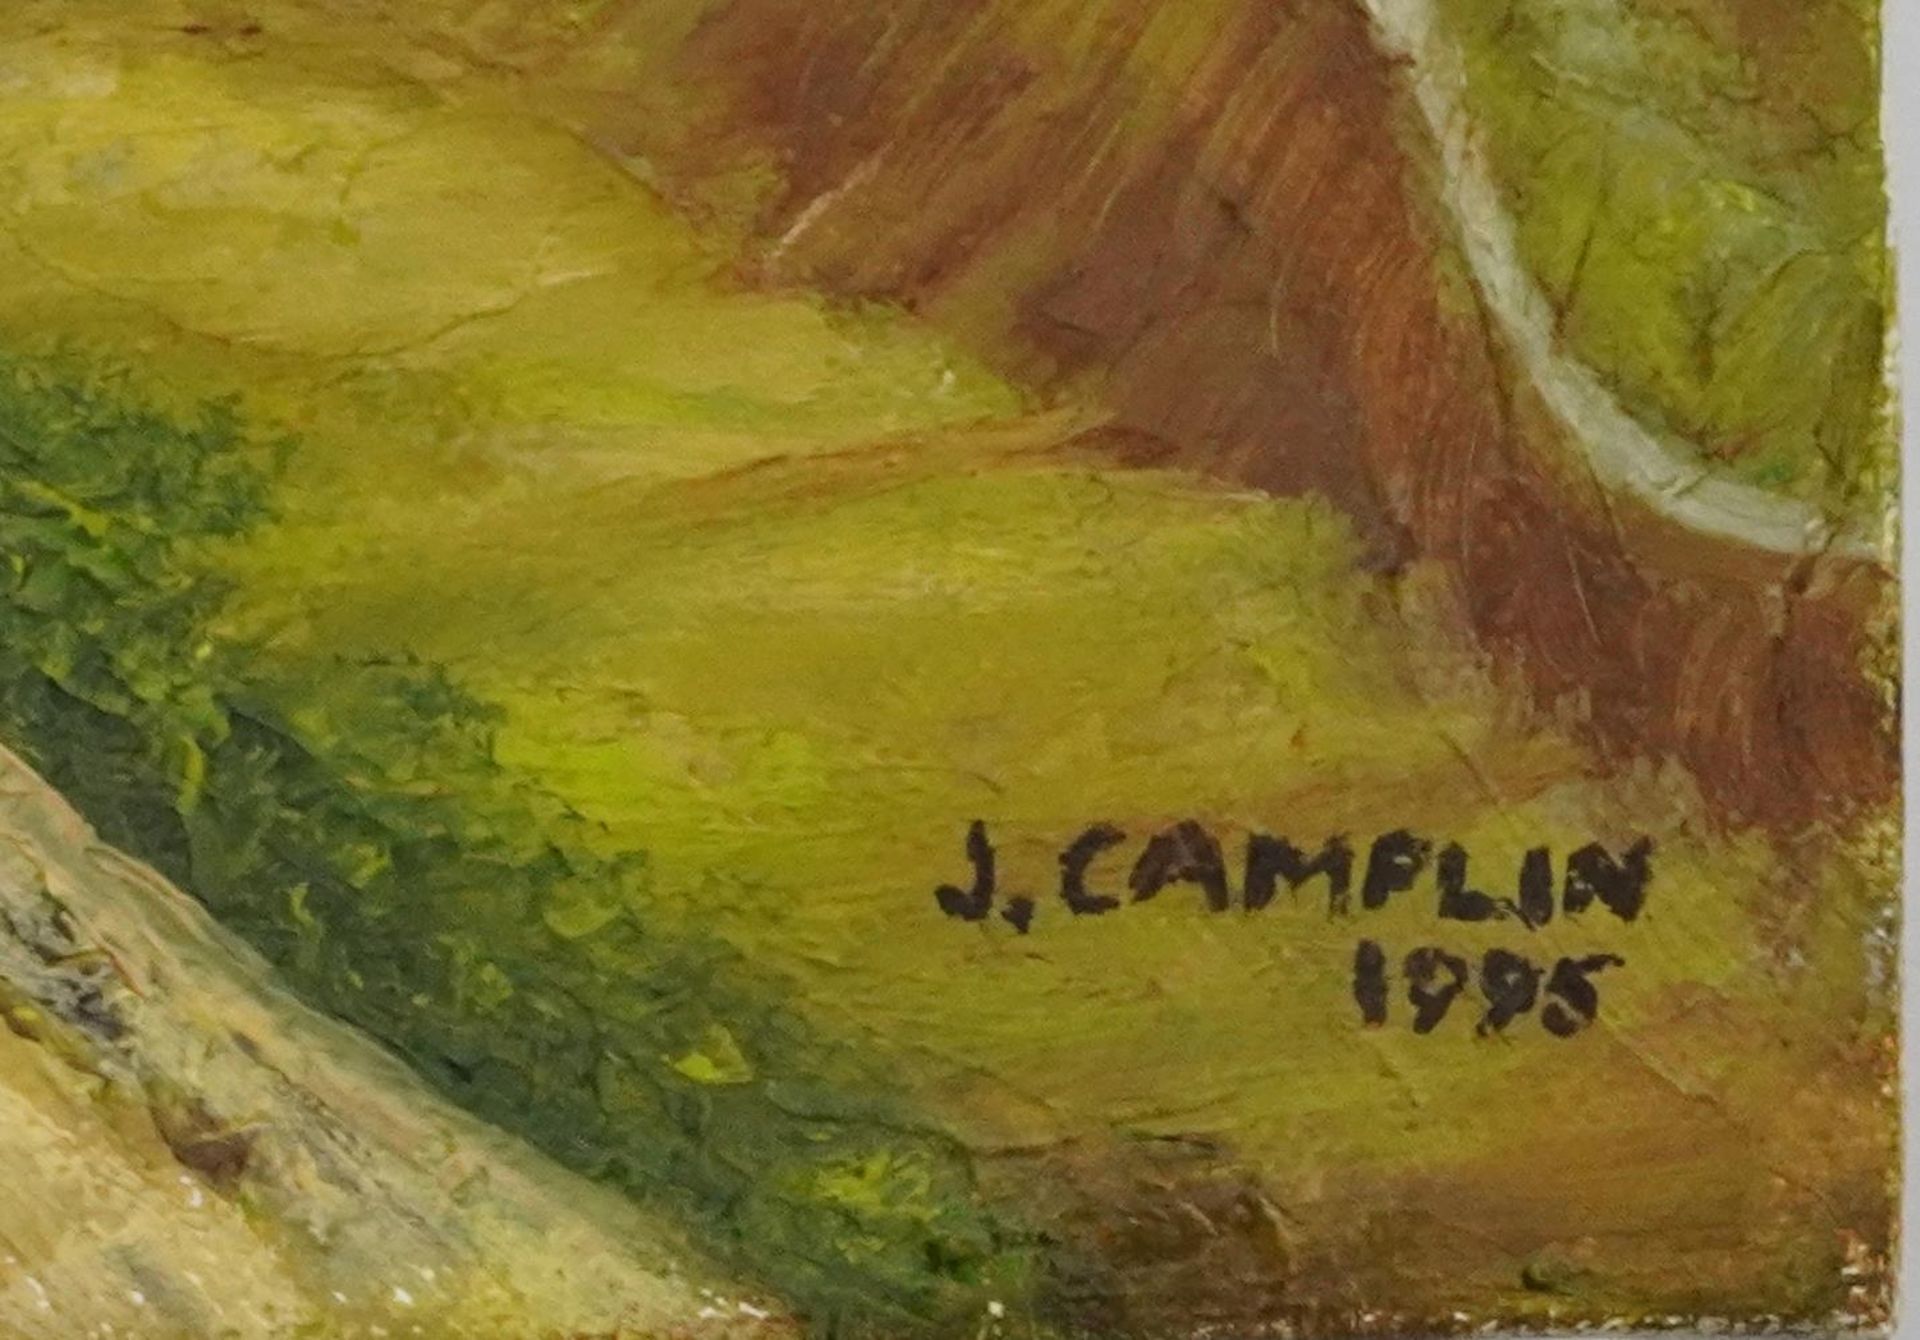 J Camplin 1995 - Glen Coe, mountainous Scottish landscape, signed oil on canvas, unframed, 41cm x - Image 2 of 3